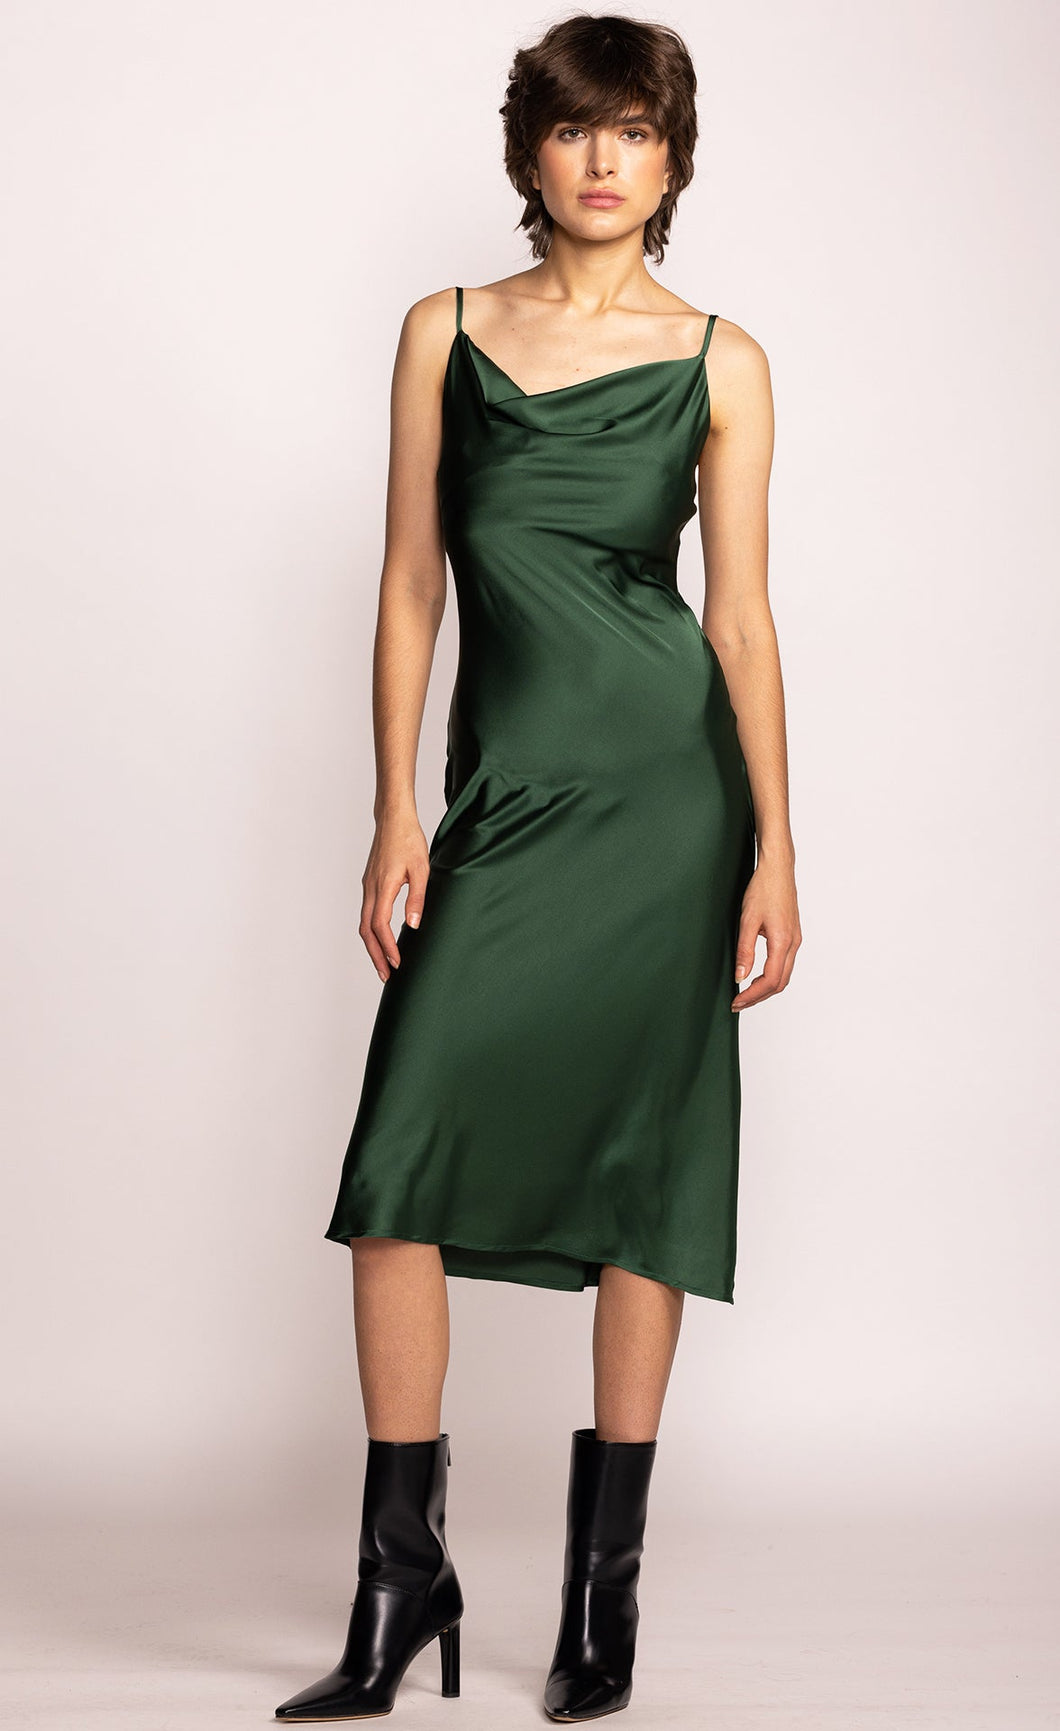 Pink Martini Green Slip Dress (NWT)